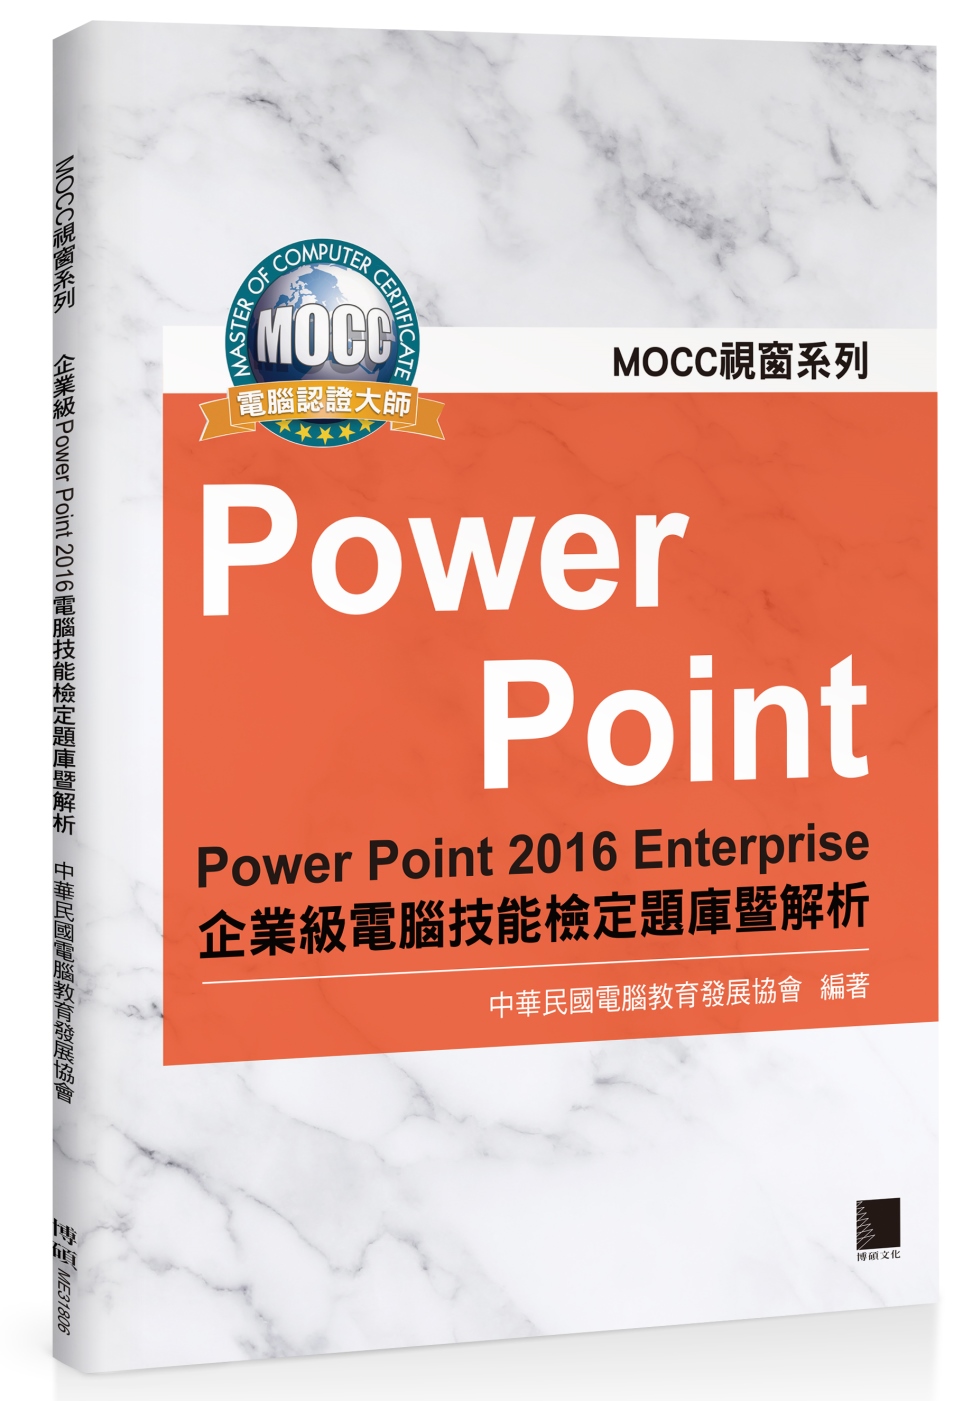 PowerPoint 2016 Enterprise企業電腦...